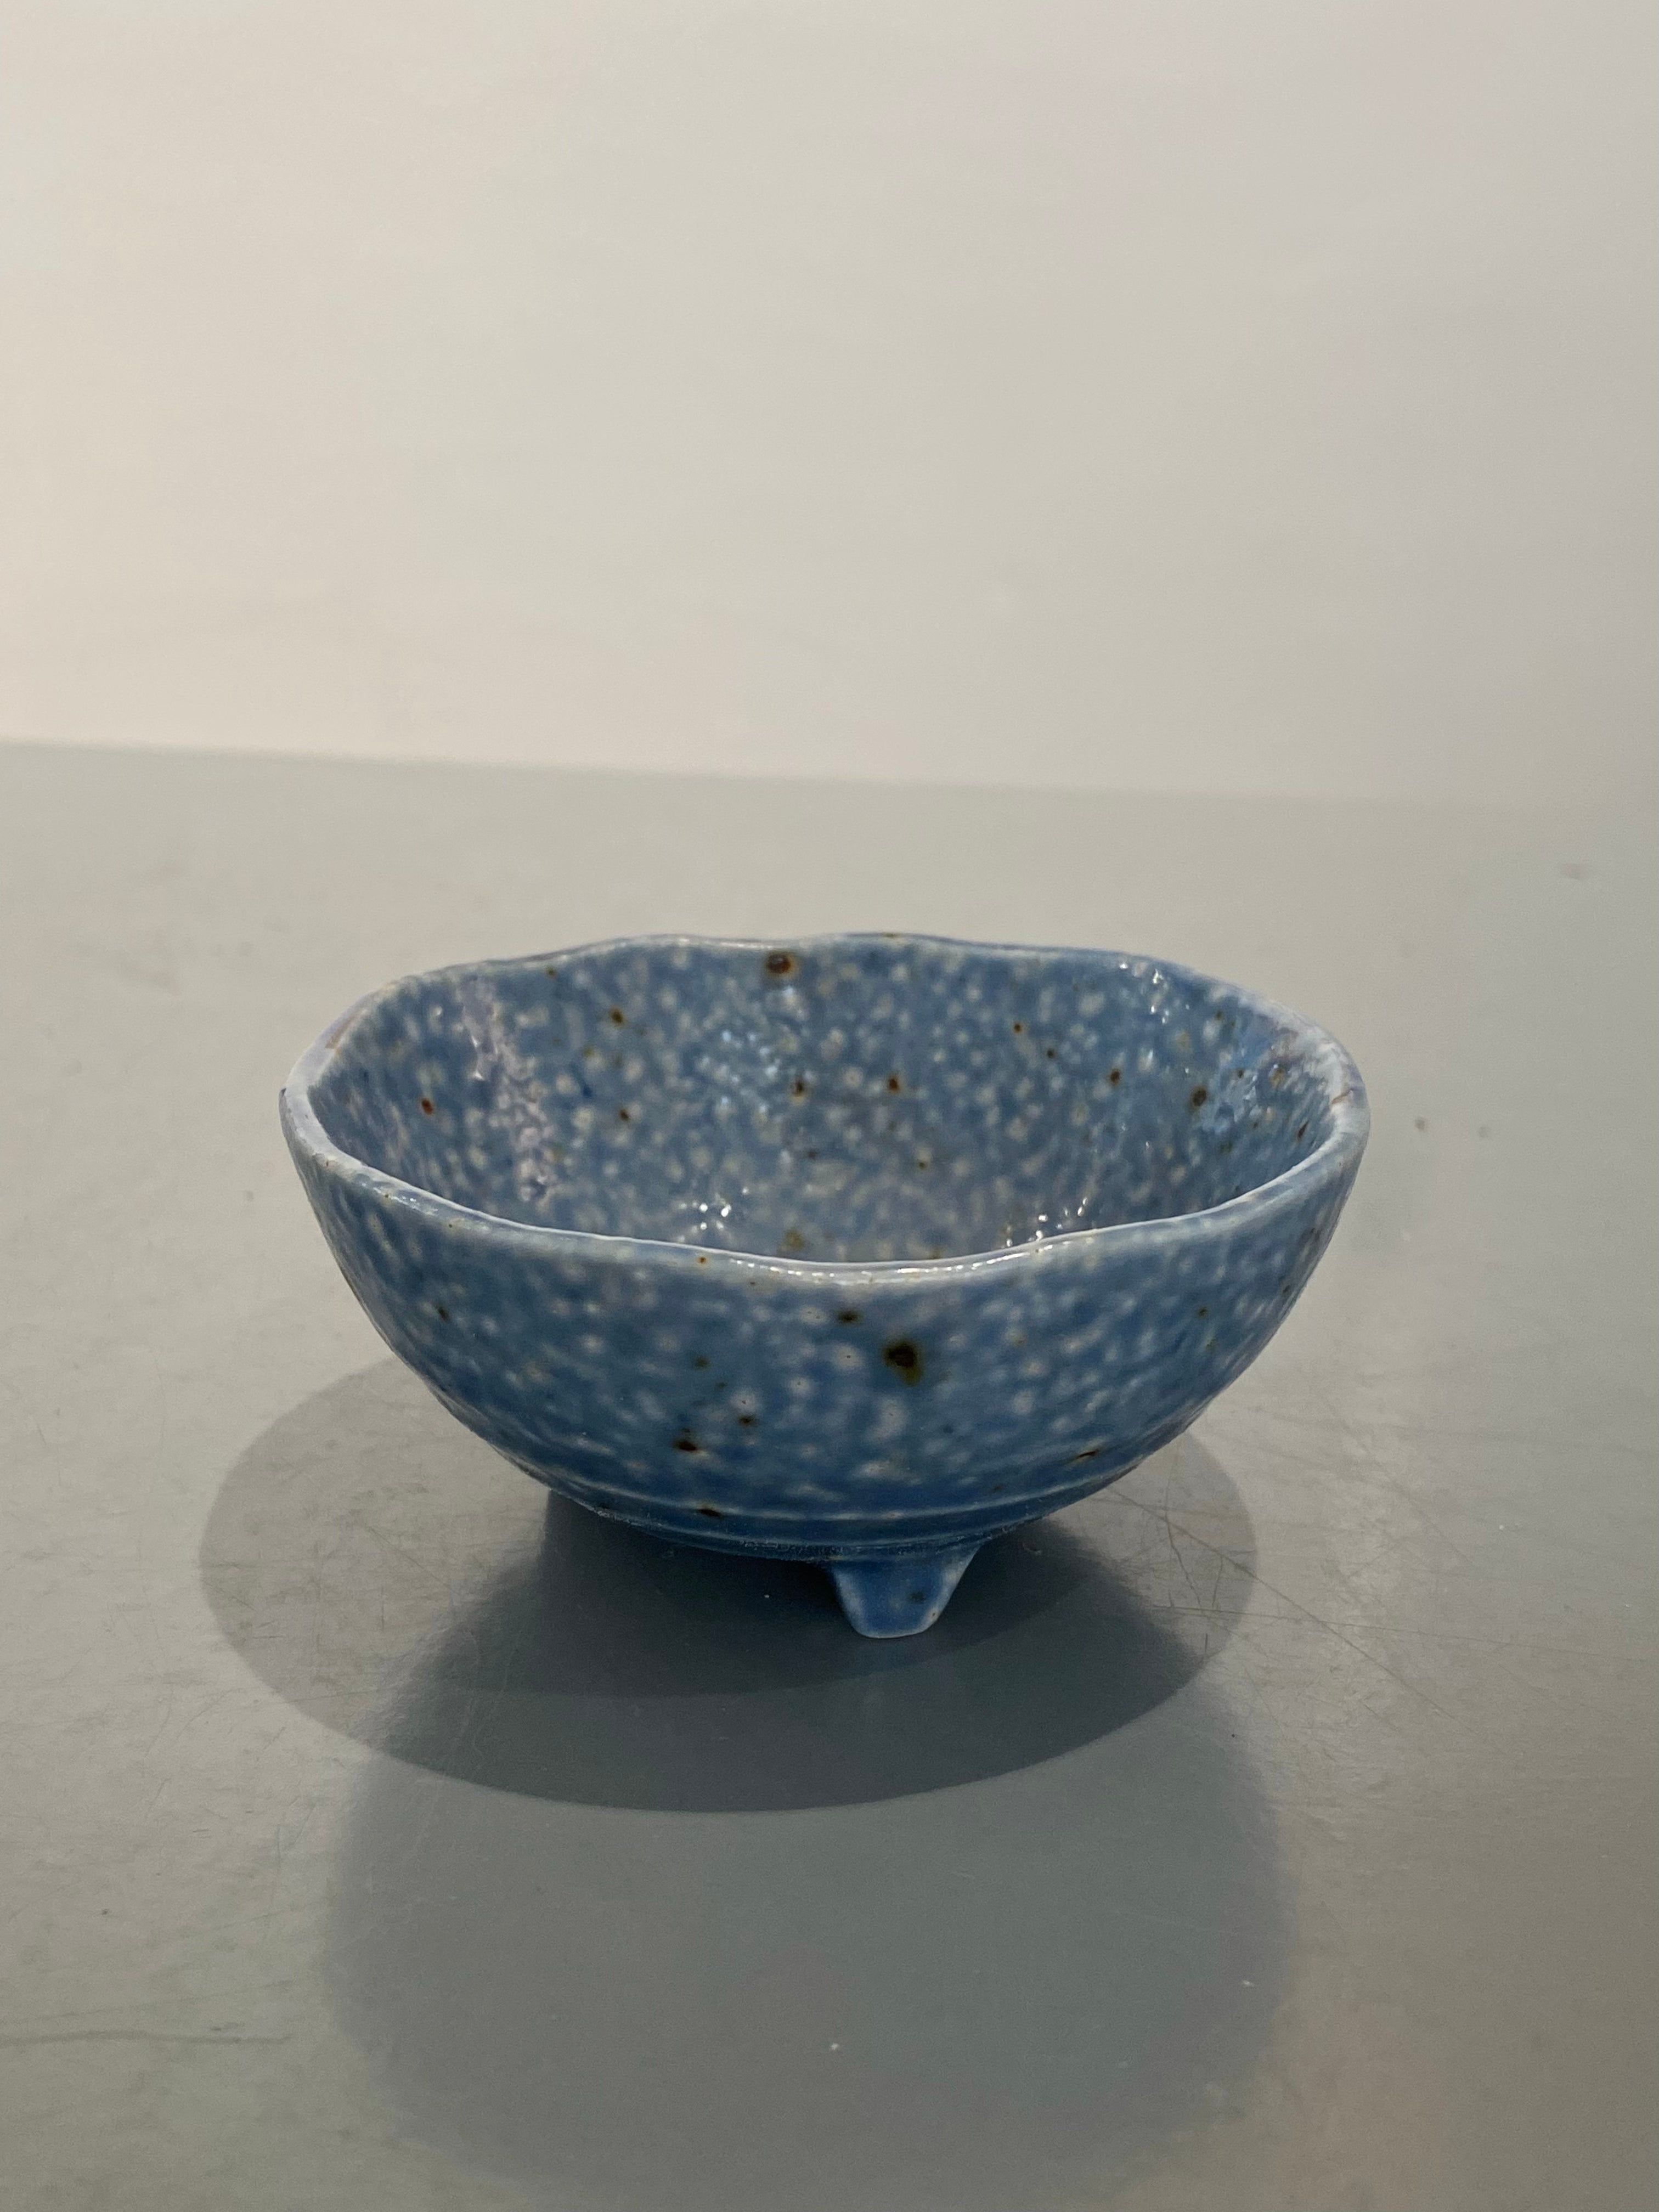 Light blue bowl with three feet